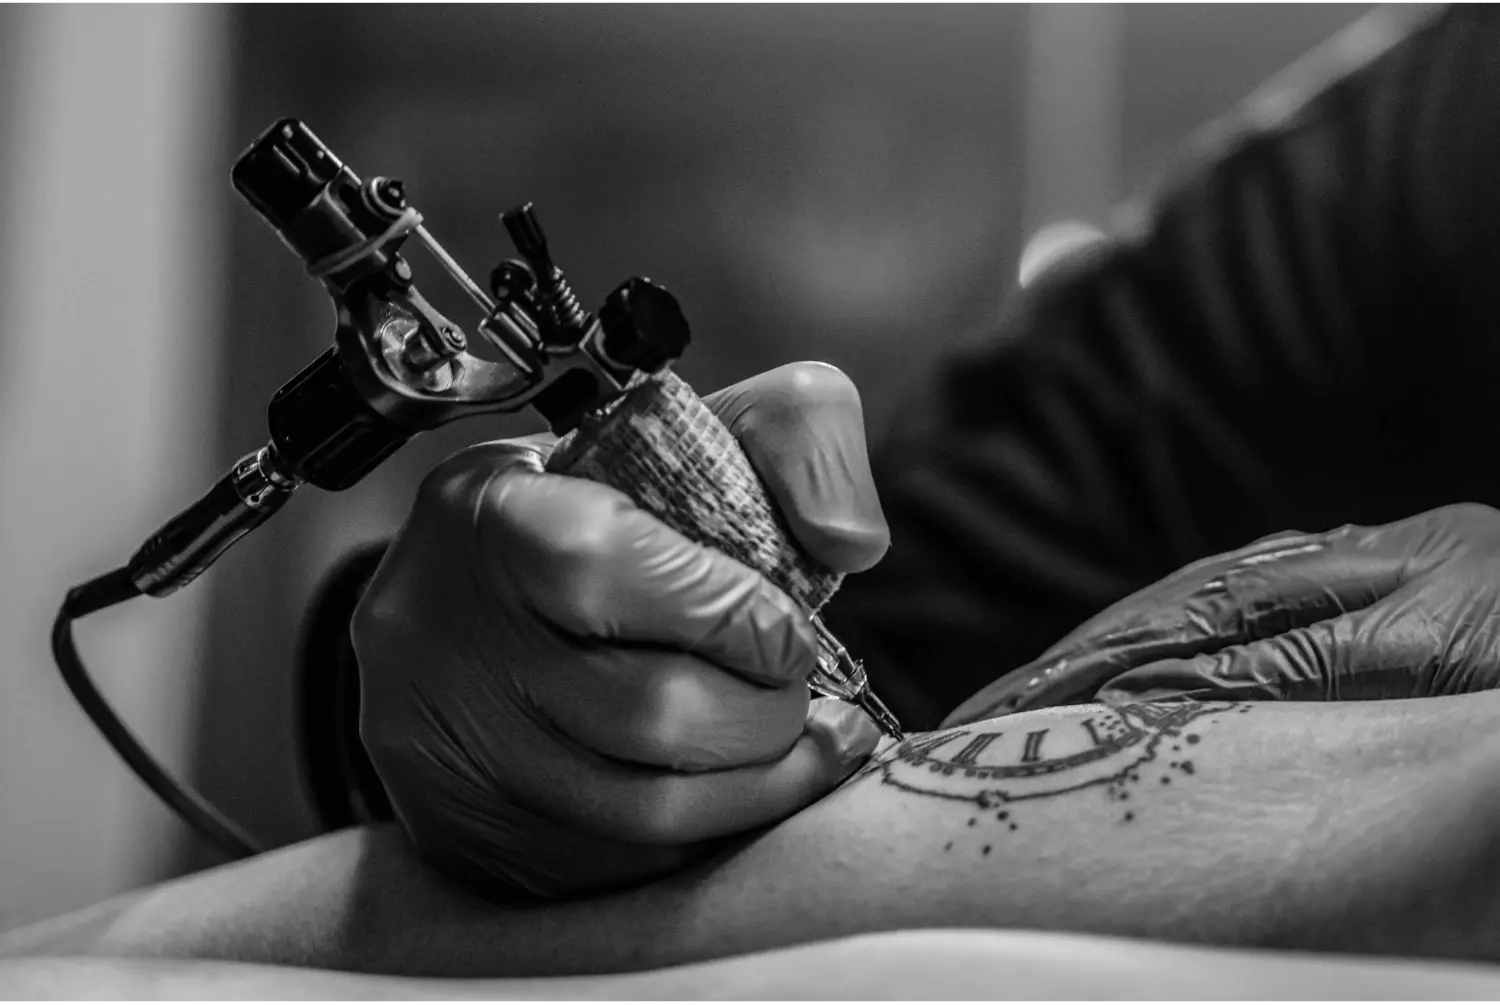 A tattoo artist making tattoo on a client's body with his tattoo gun